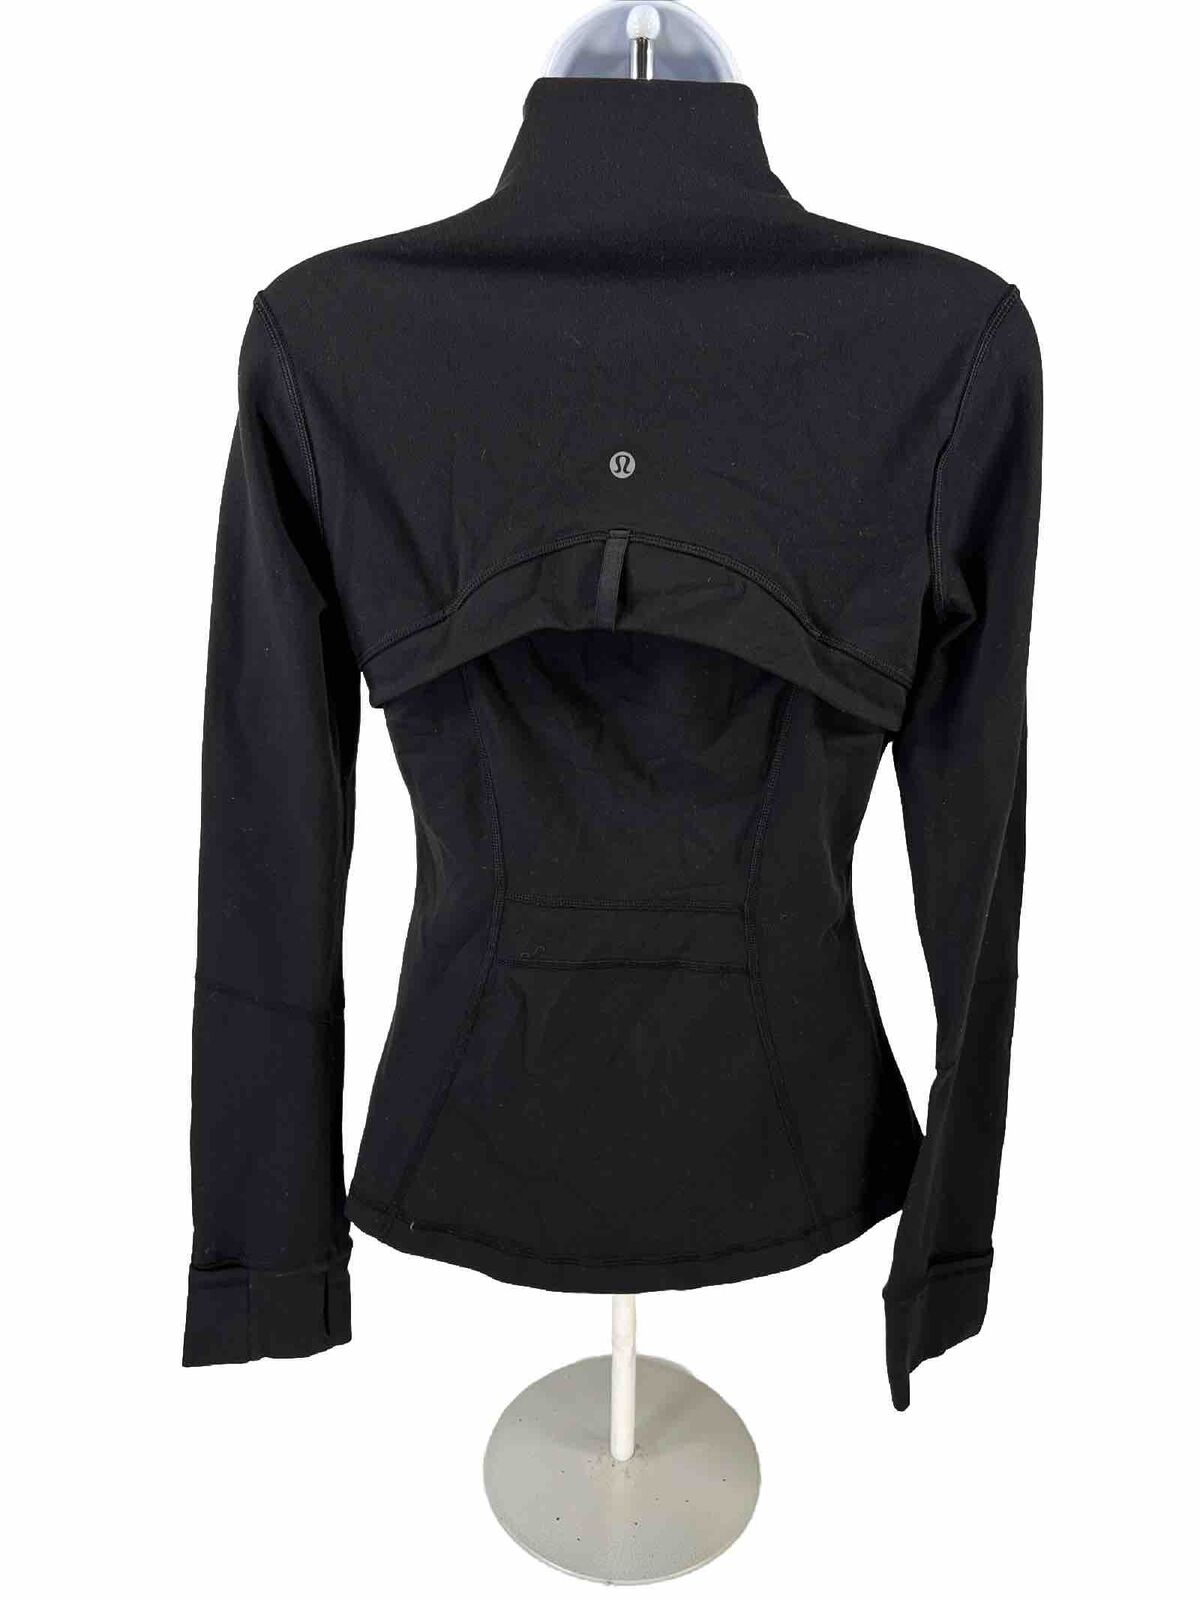 Lululemon Women's Black Full Zip Define Athletic Jacket - 6